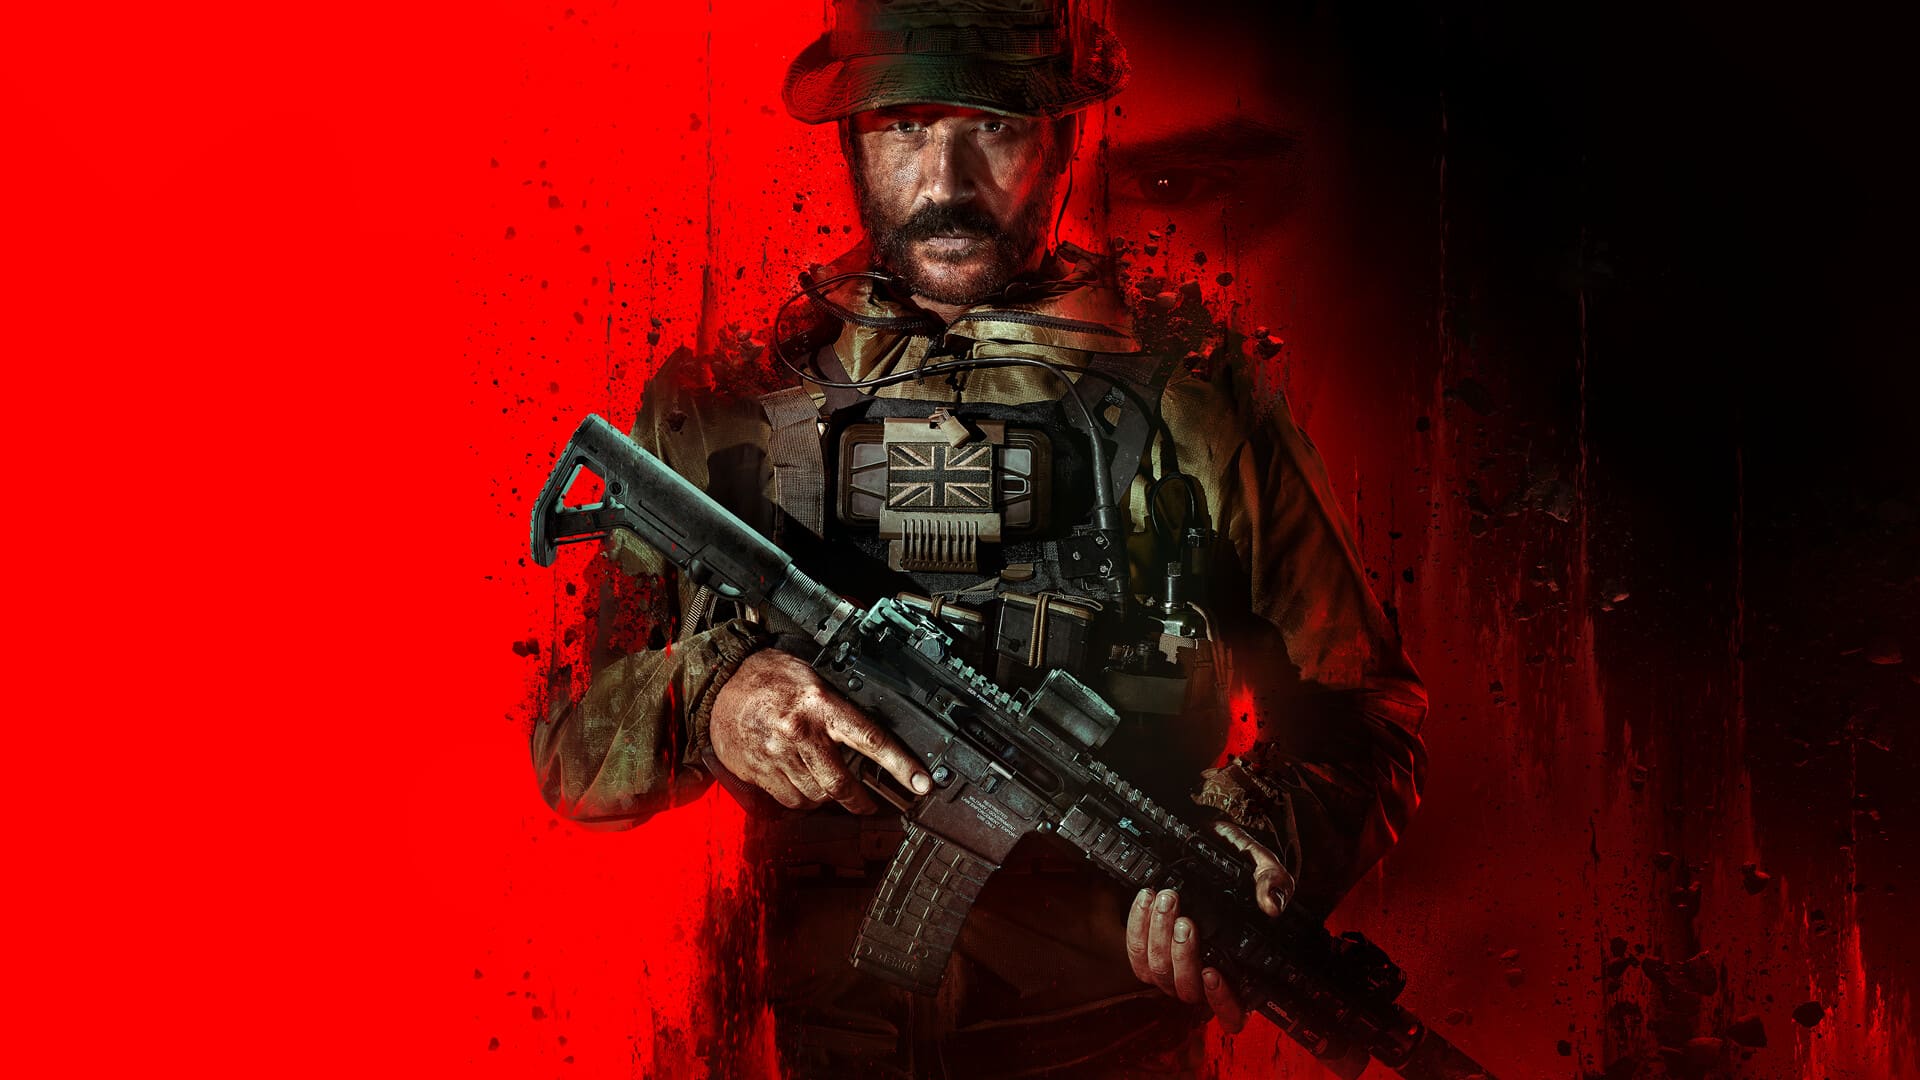 Call of Duty 4: Modern Warfare Full Campaign Walkthrough (1080p